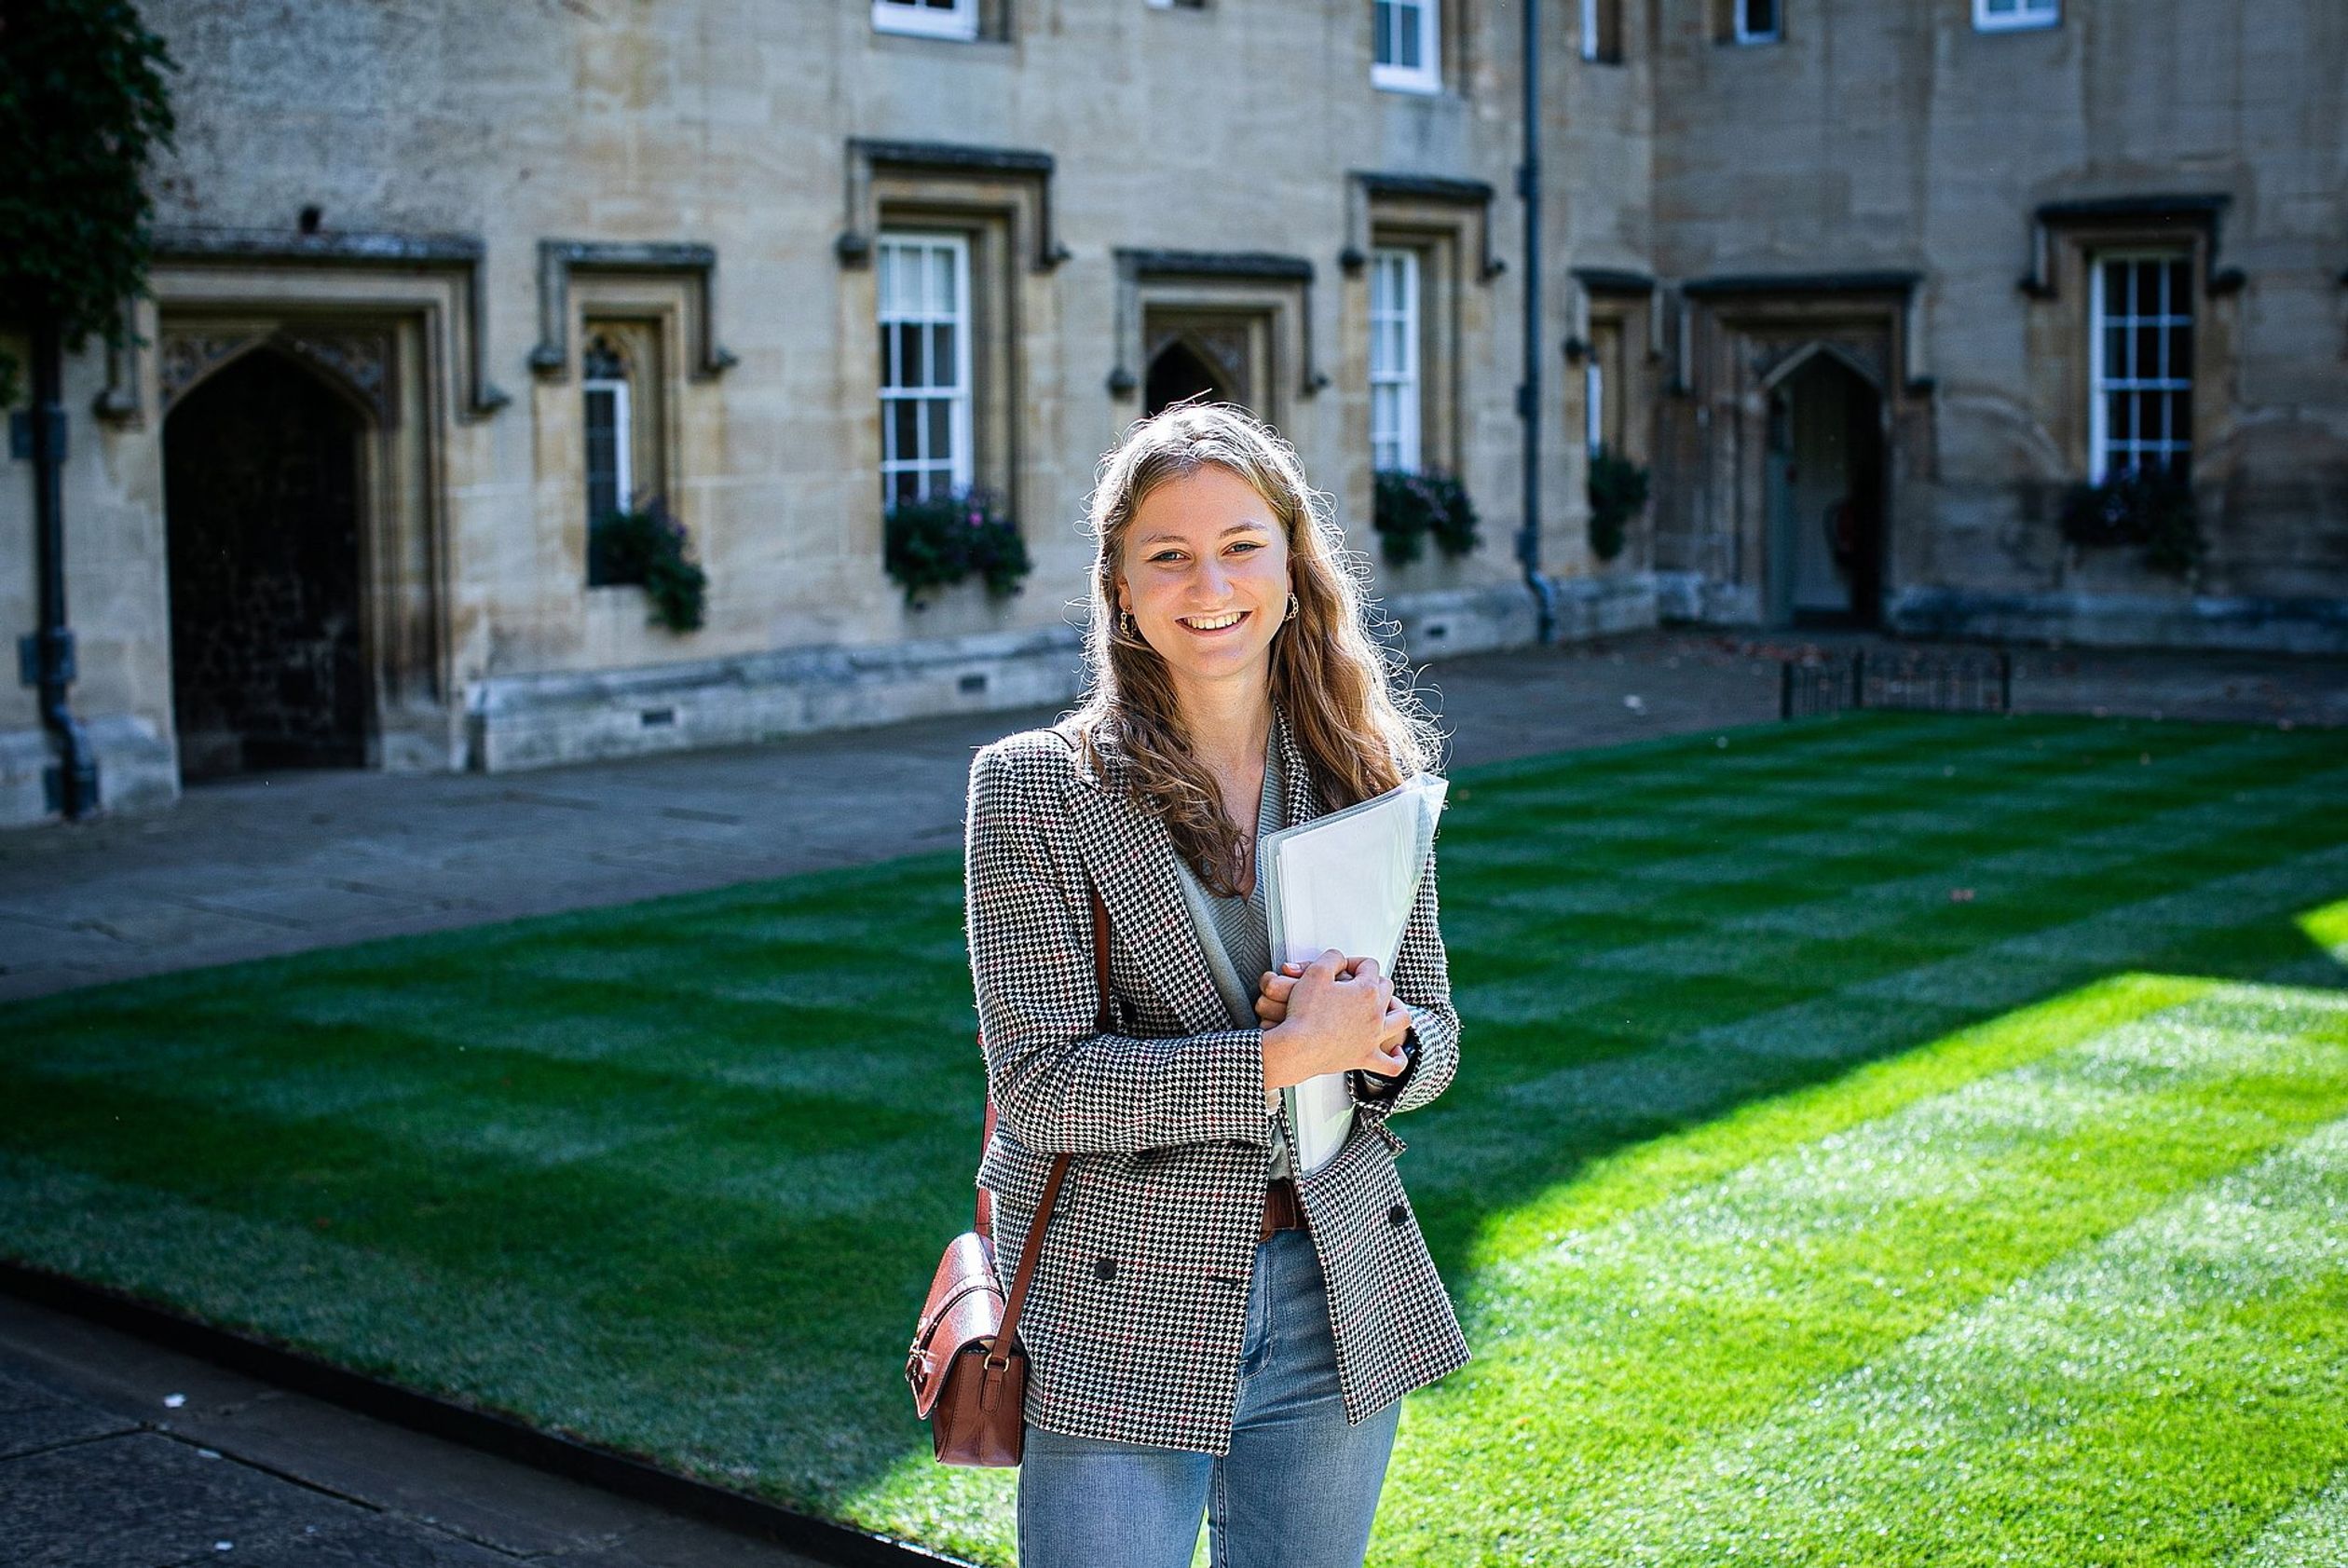 September 2021: Prinses Elisabeth begint aan haar opleiding op het Lincoln College in Oxford. Voor